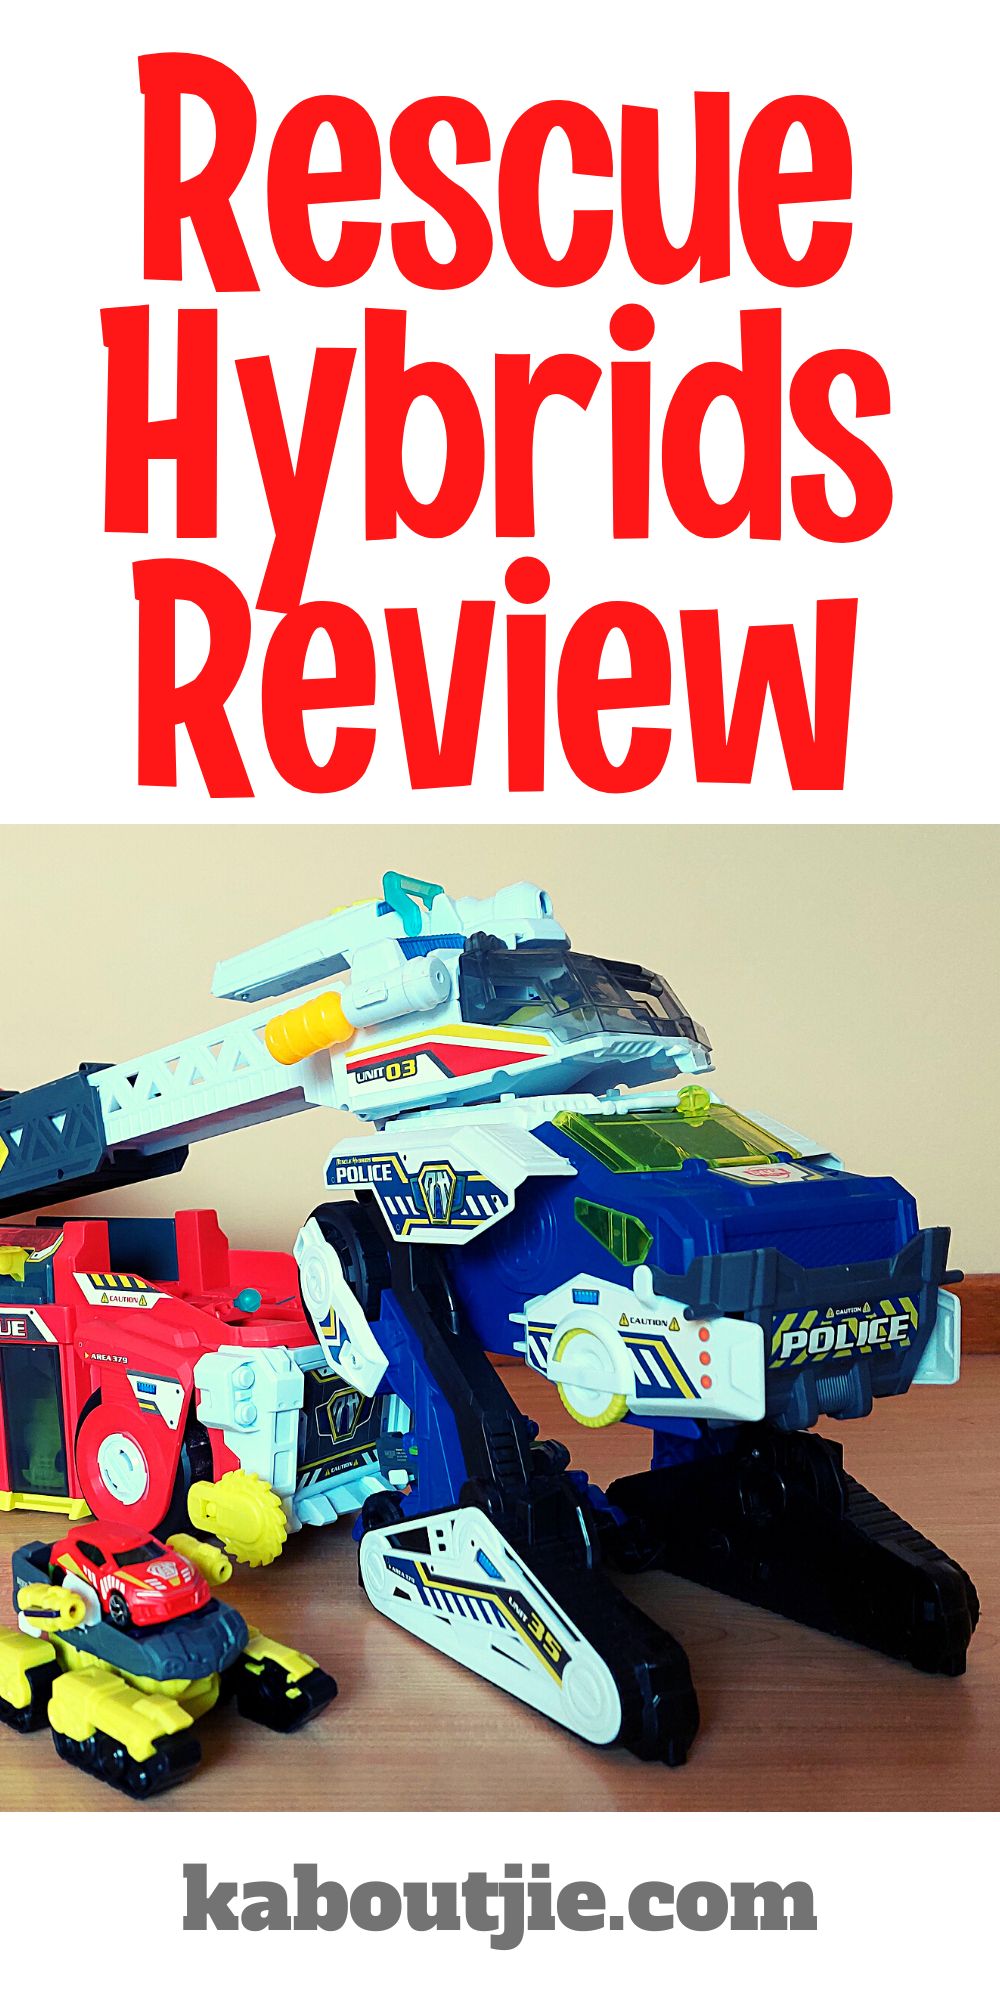 Rescue Hybrids Review